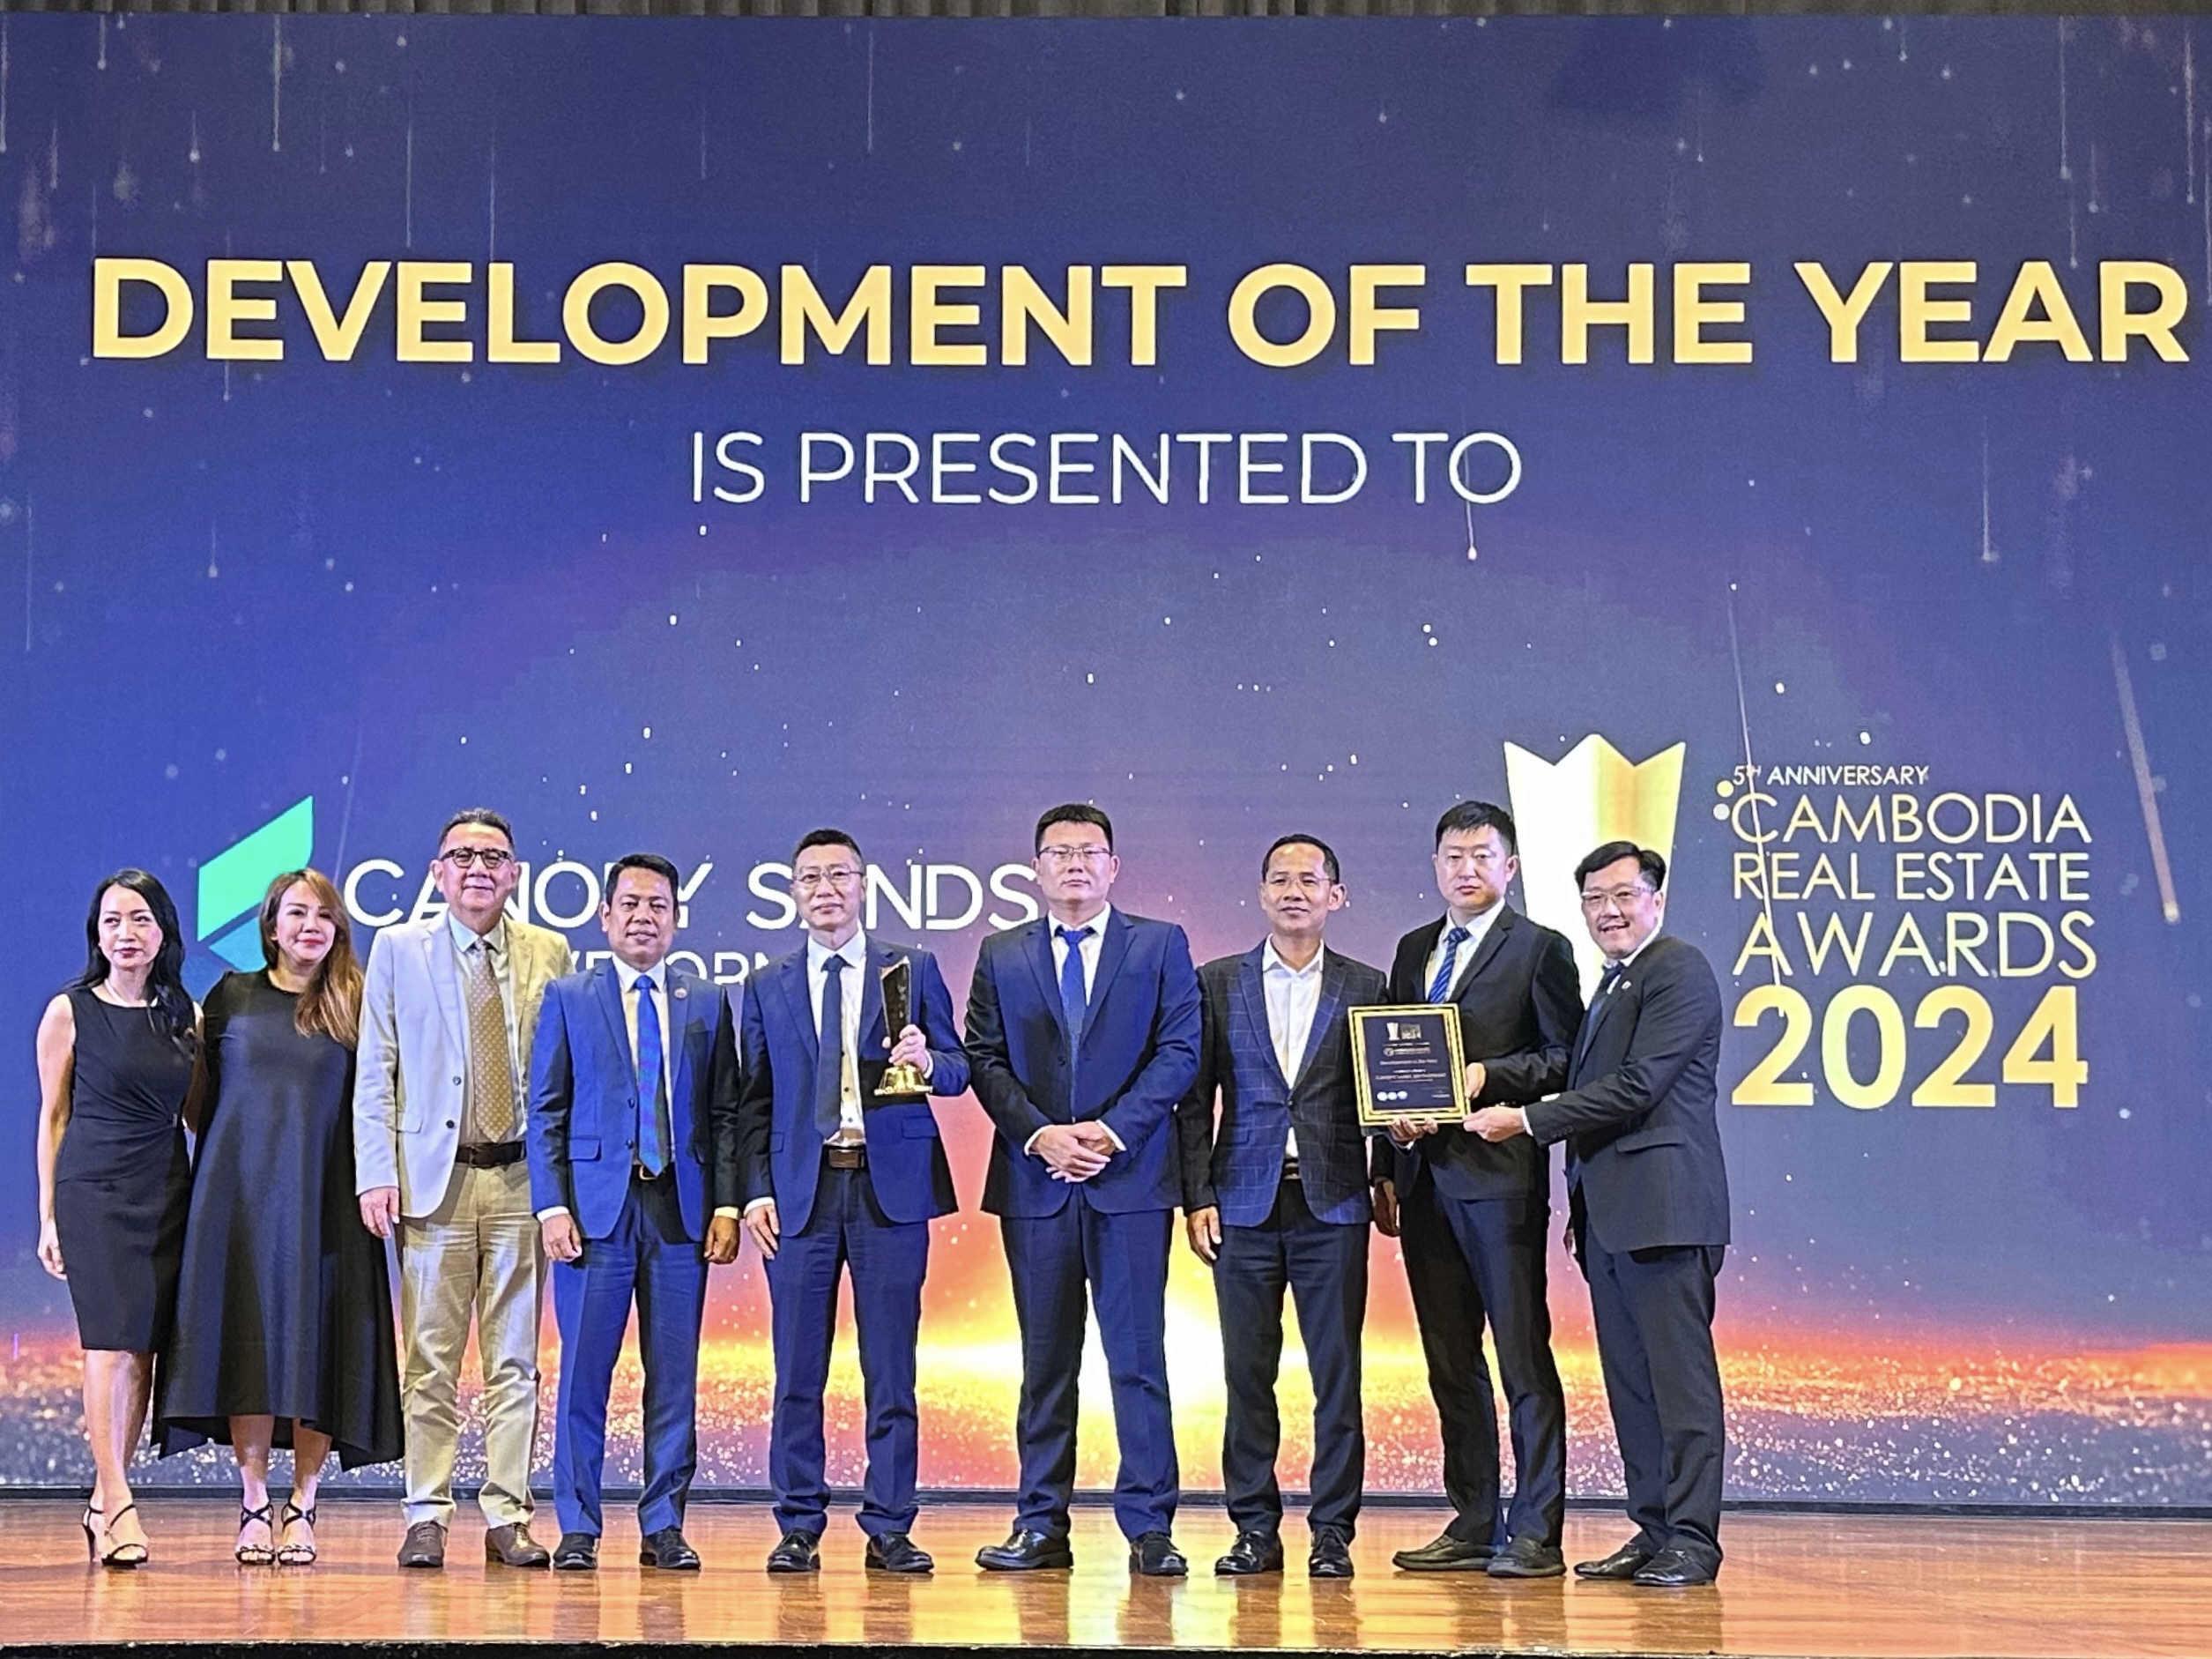 Canopy Sands Development wins three prestigious awards at the 2024 Cambodia Real Estate Awards (CREA): Township Development of the Year, Lifestyle Developer of the Year, and Development of the Year